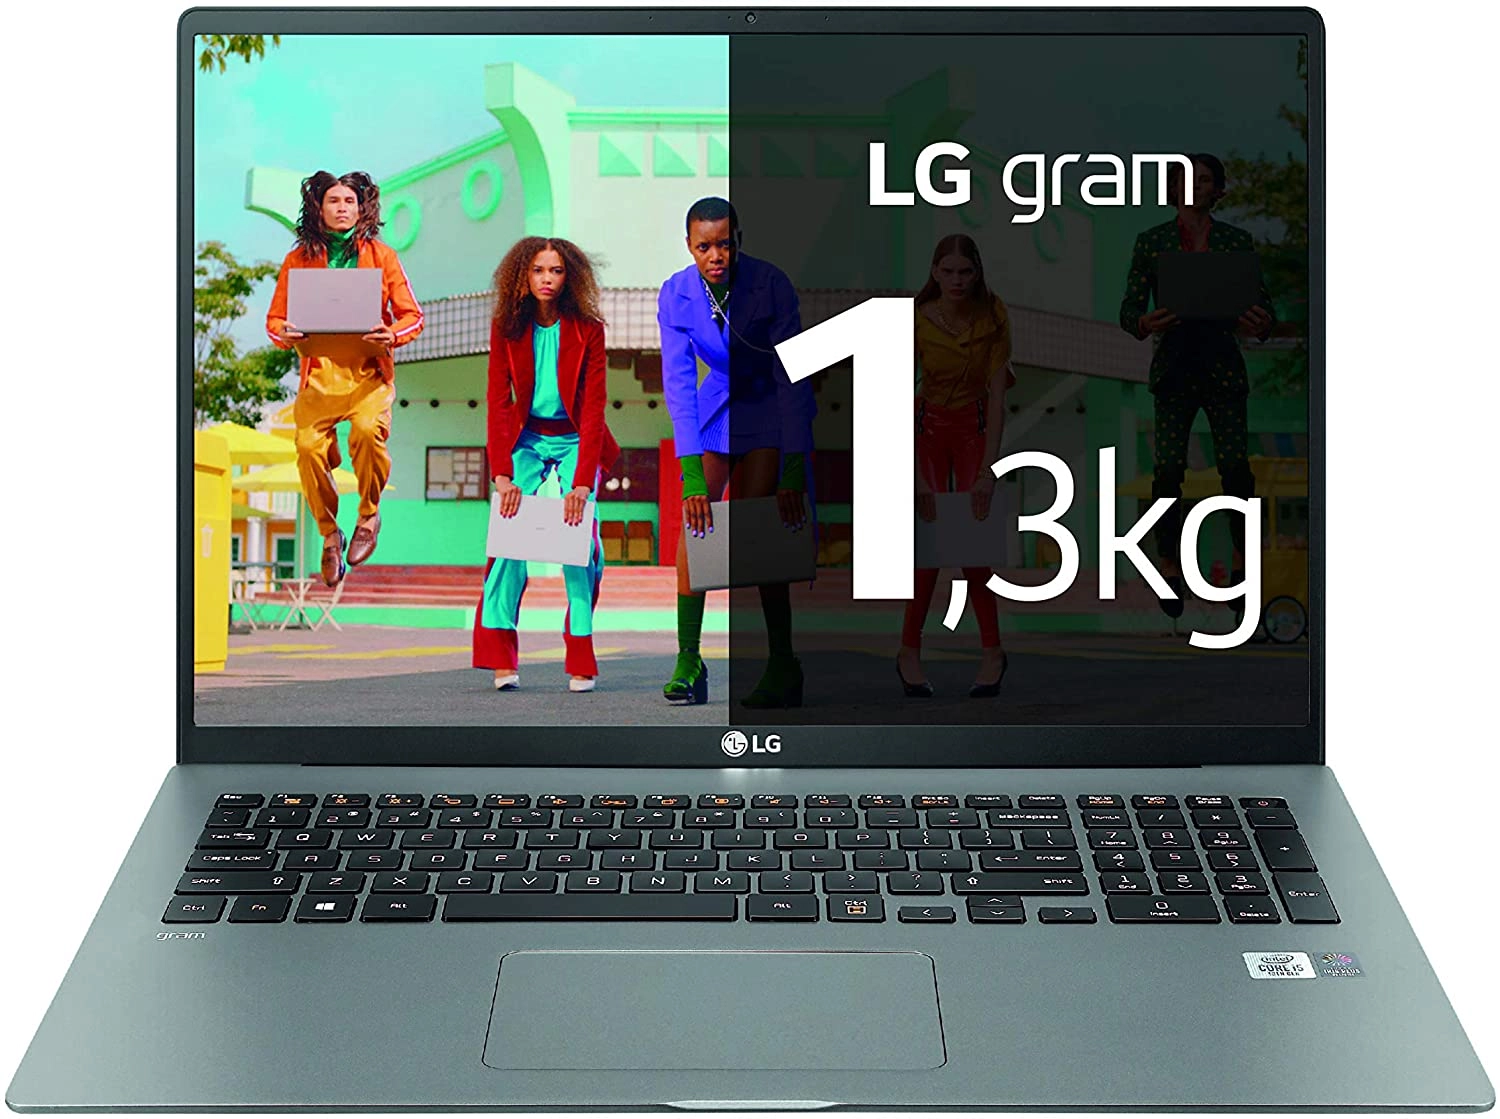 LG 17Z90N-V-AA78B laptop image